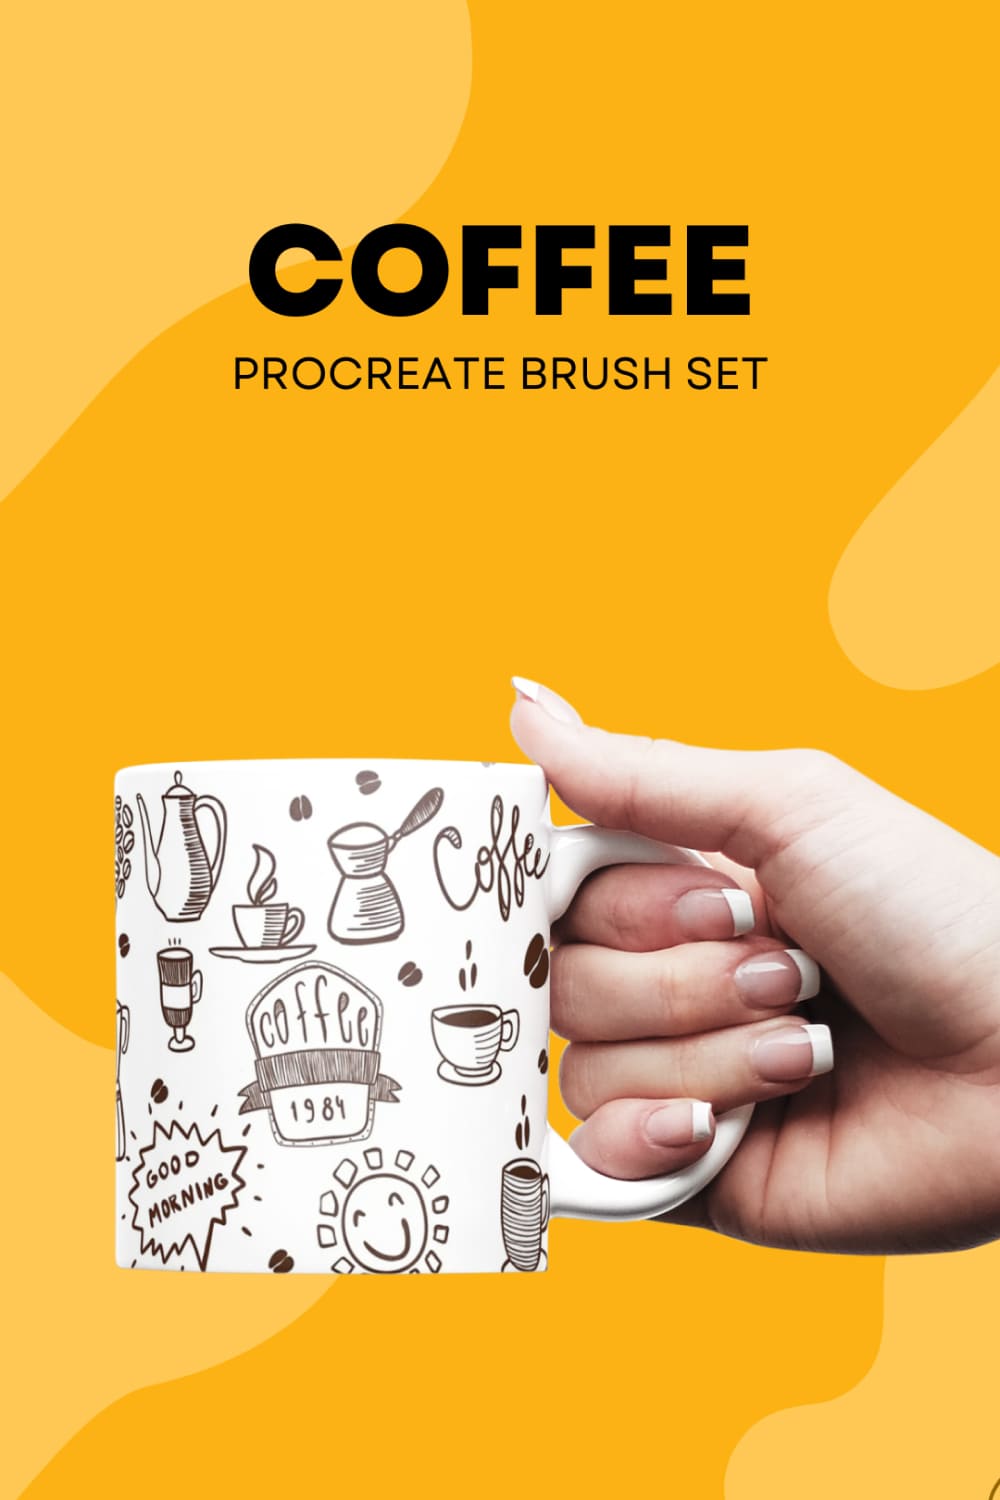 Coffee Procreate Brush Set - pinterest image preview.